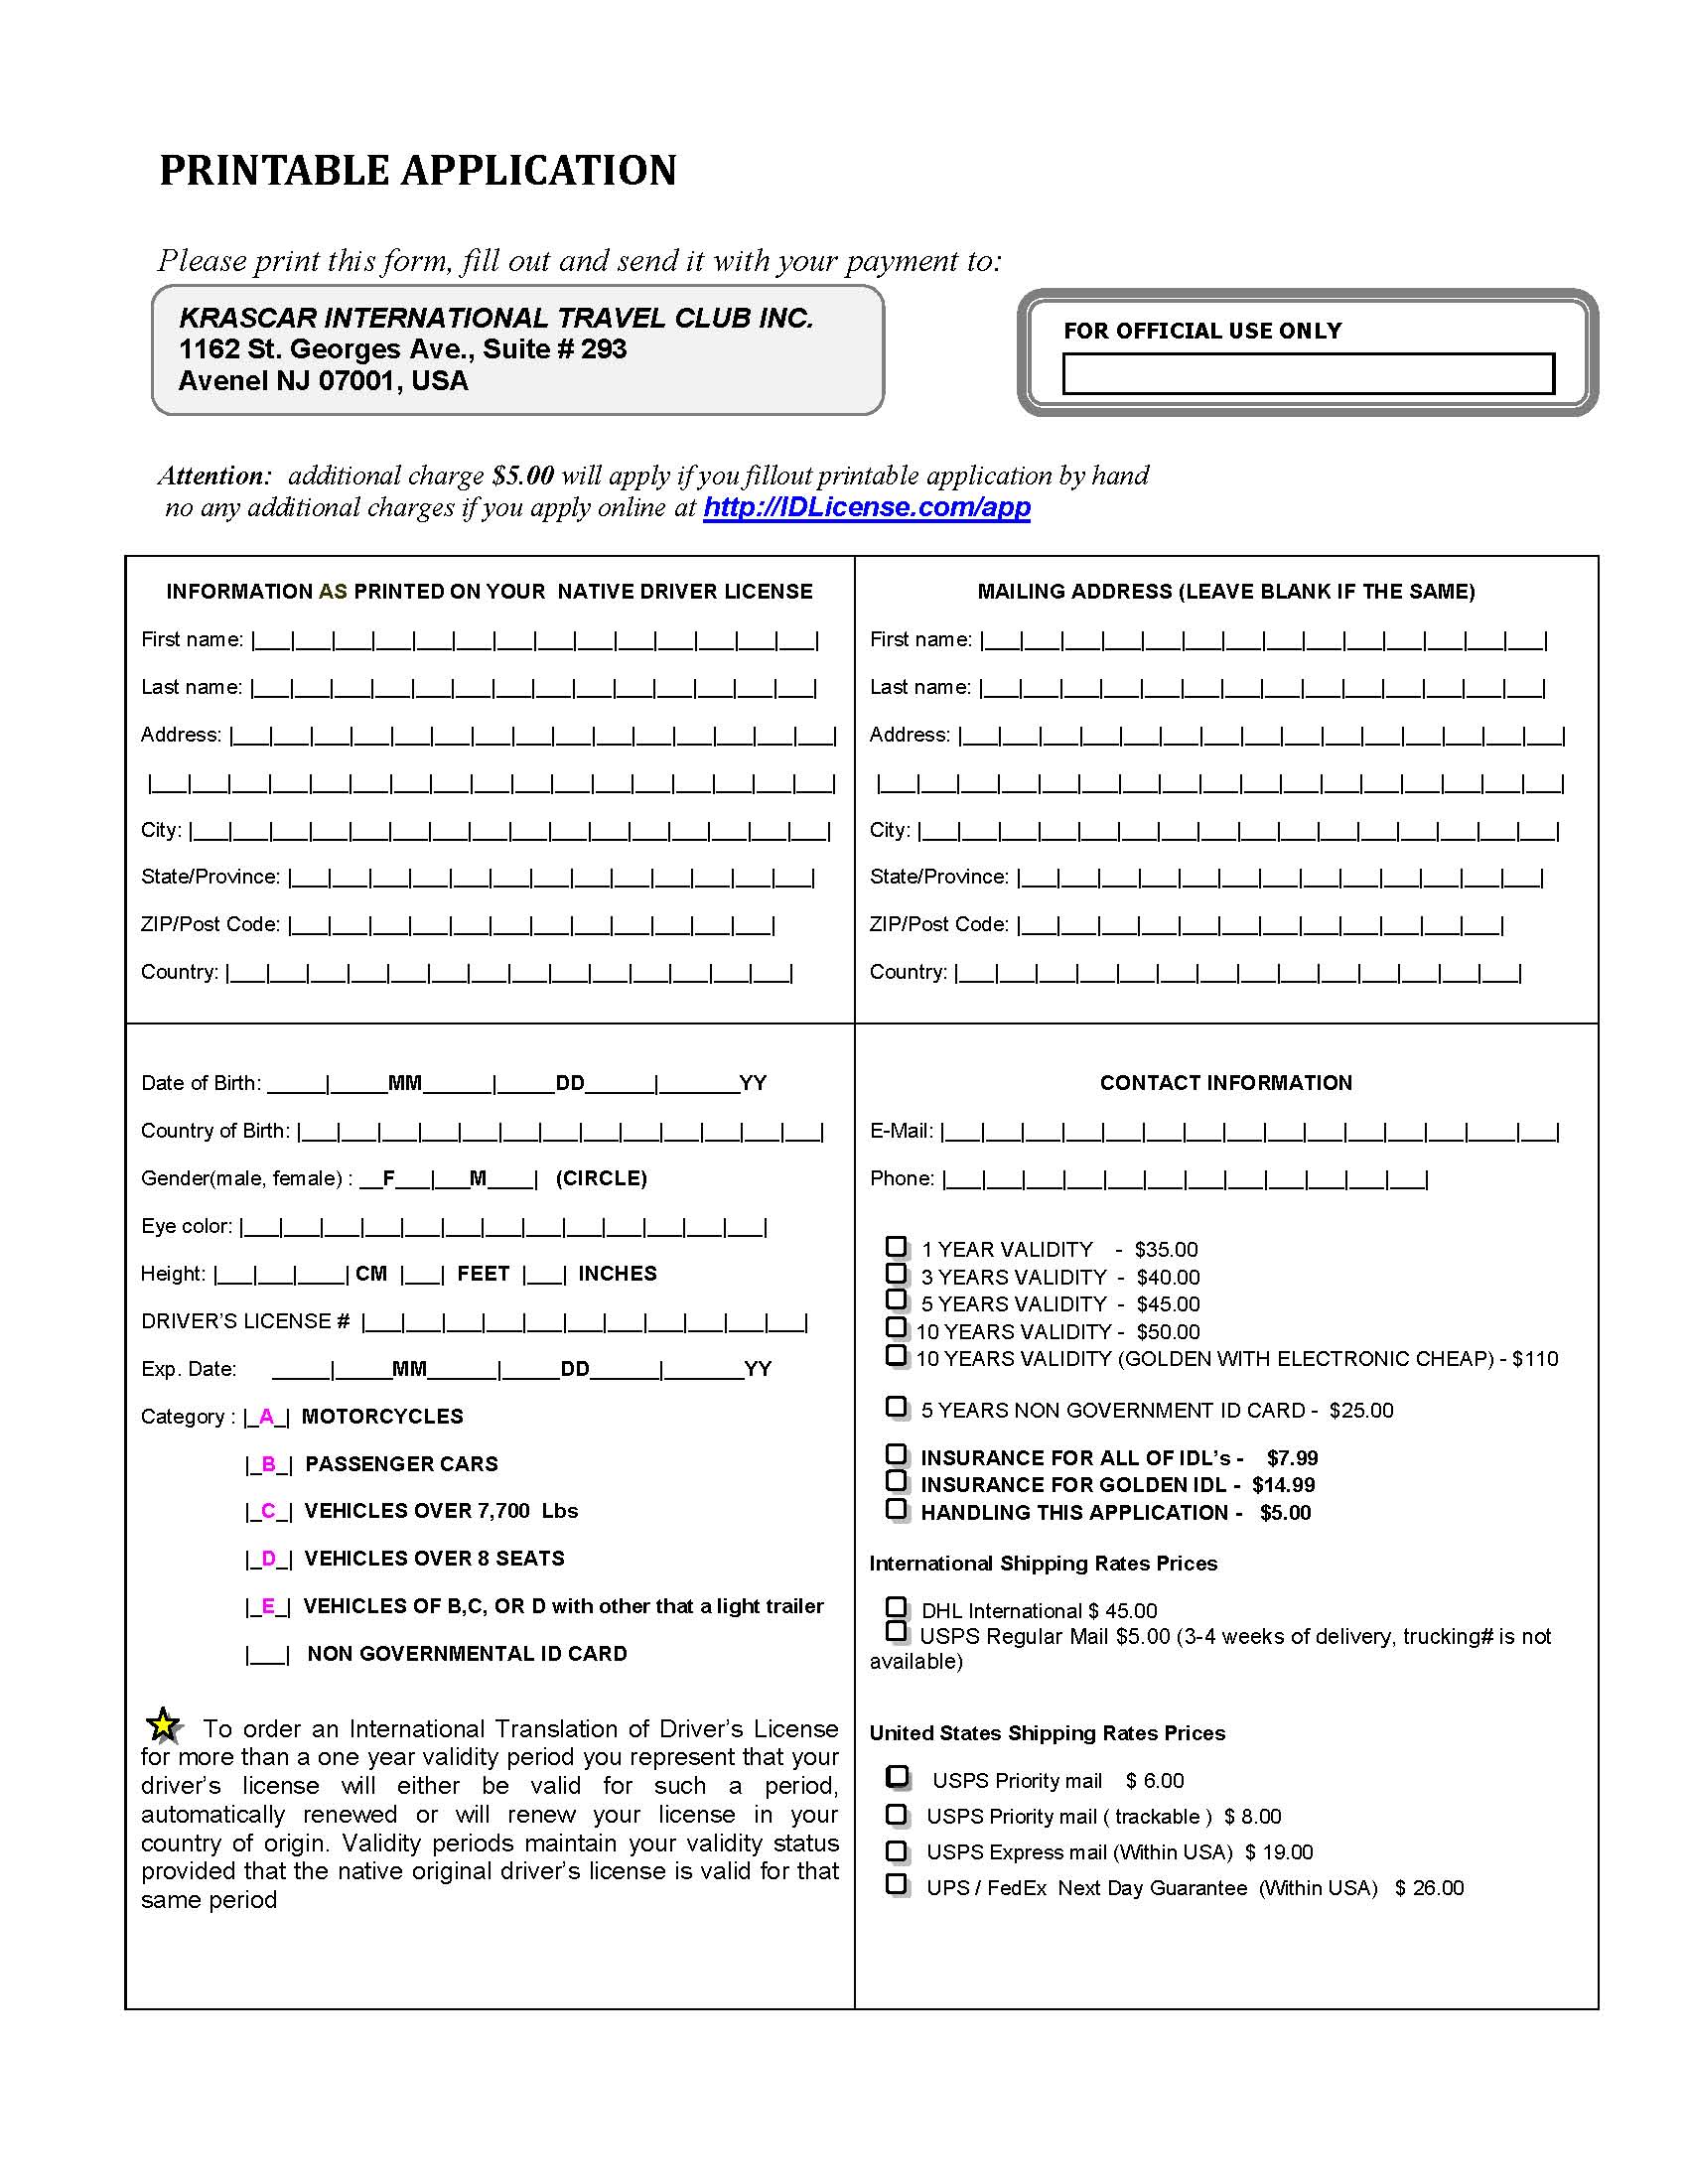 International Drivers License, international driving document